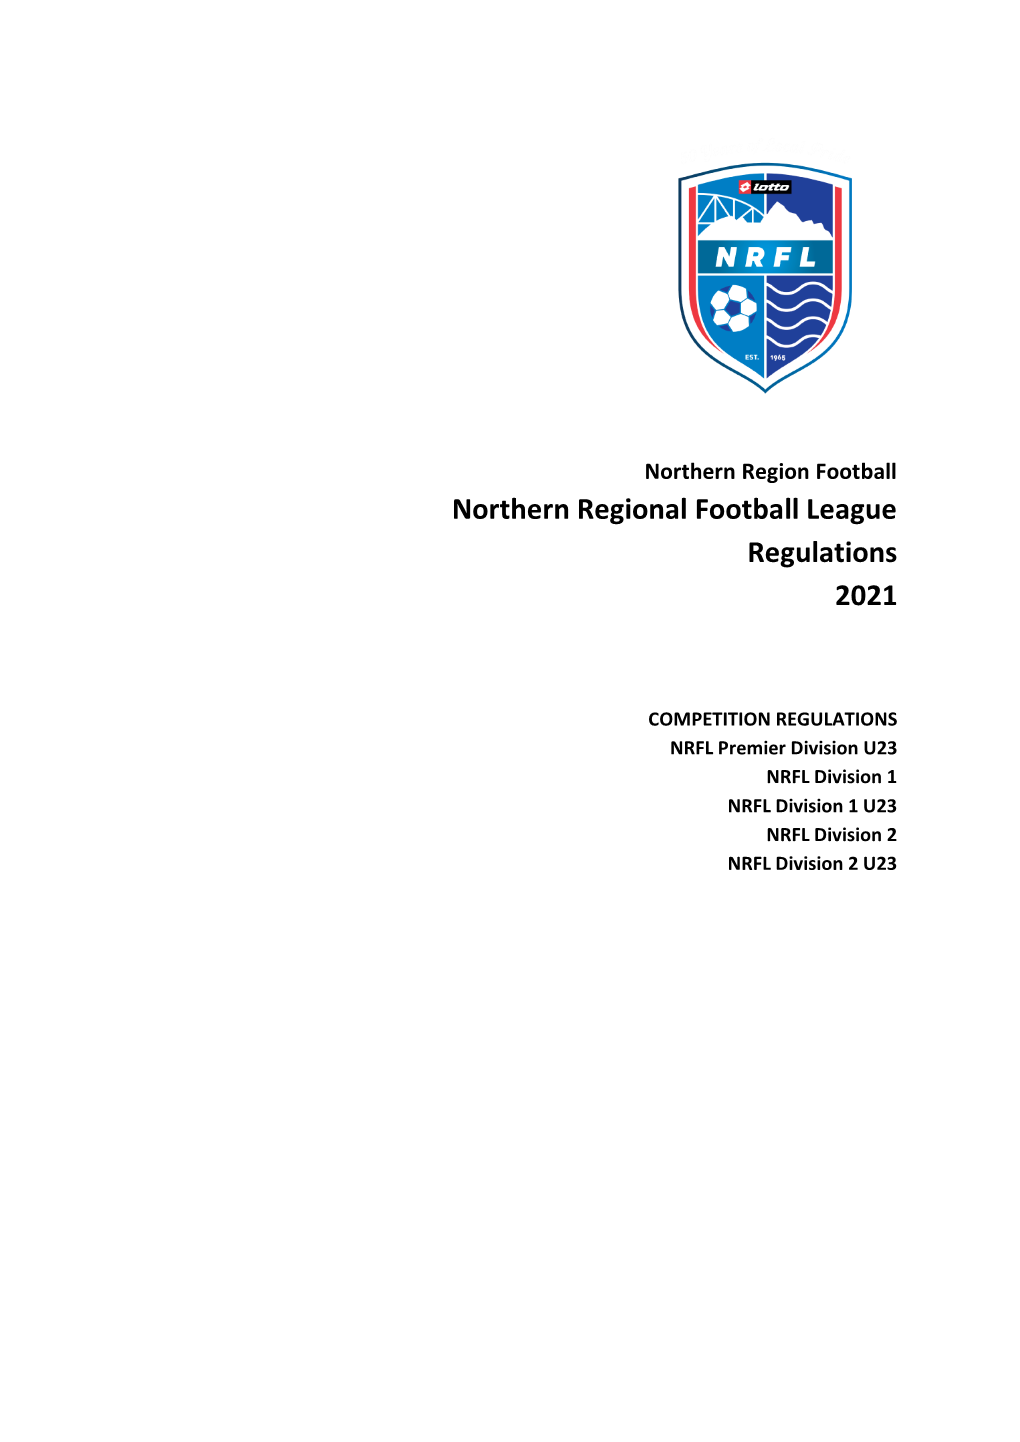 Northern Regional Football League Regulations 2021